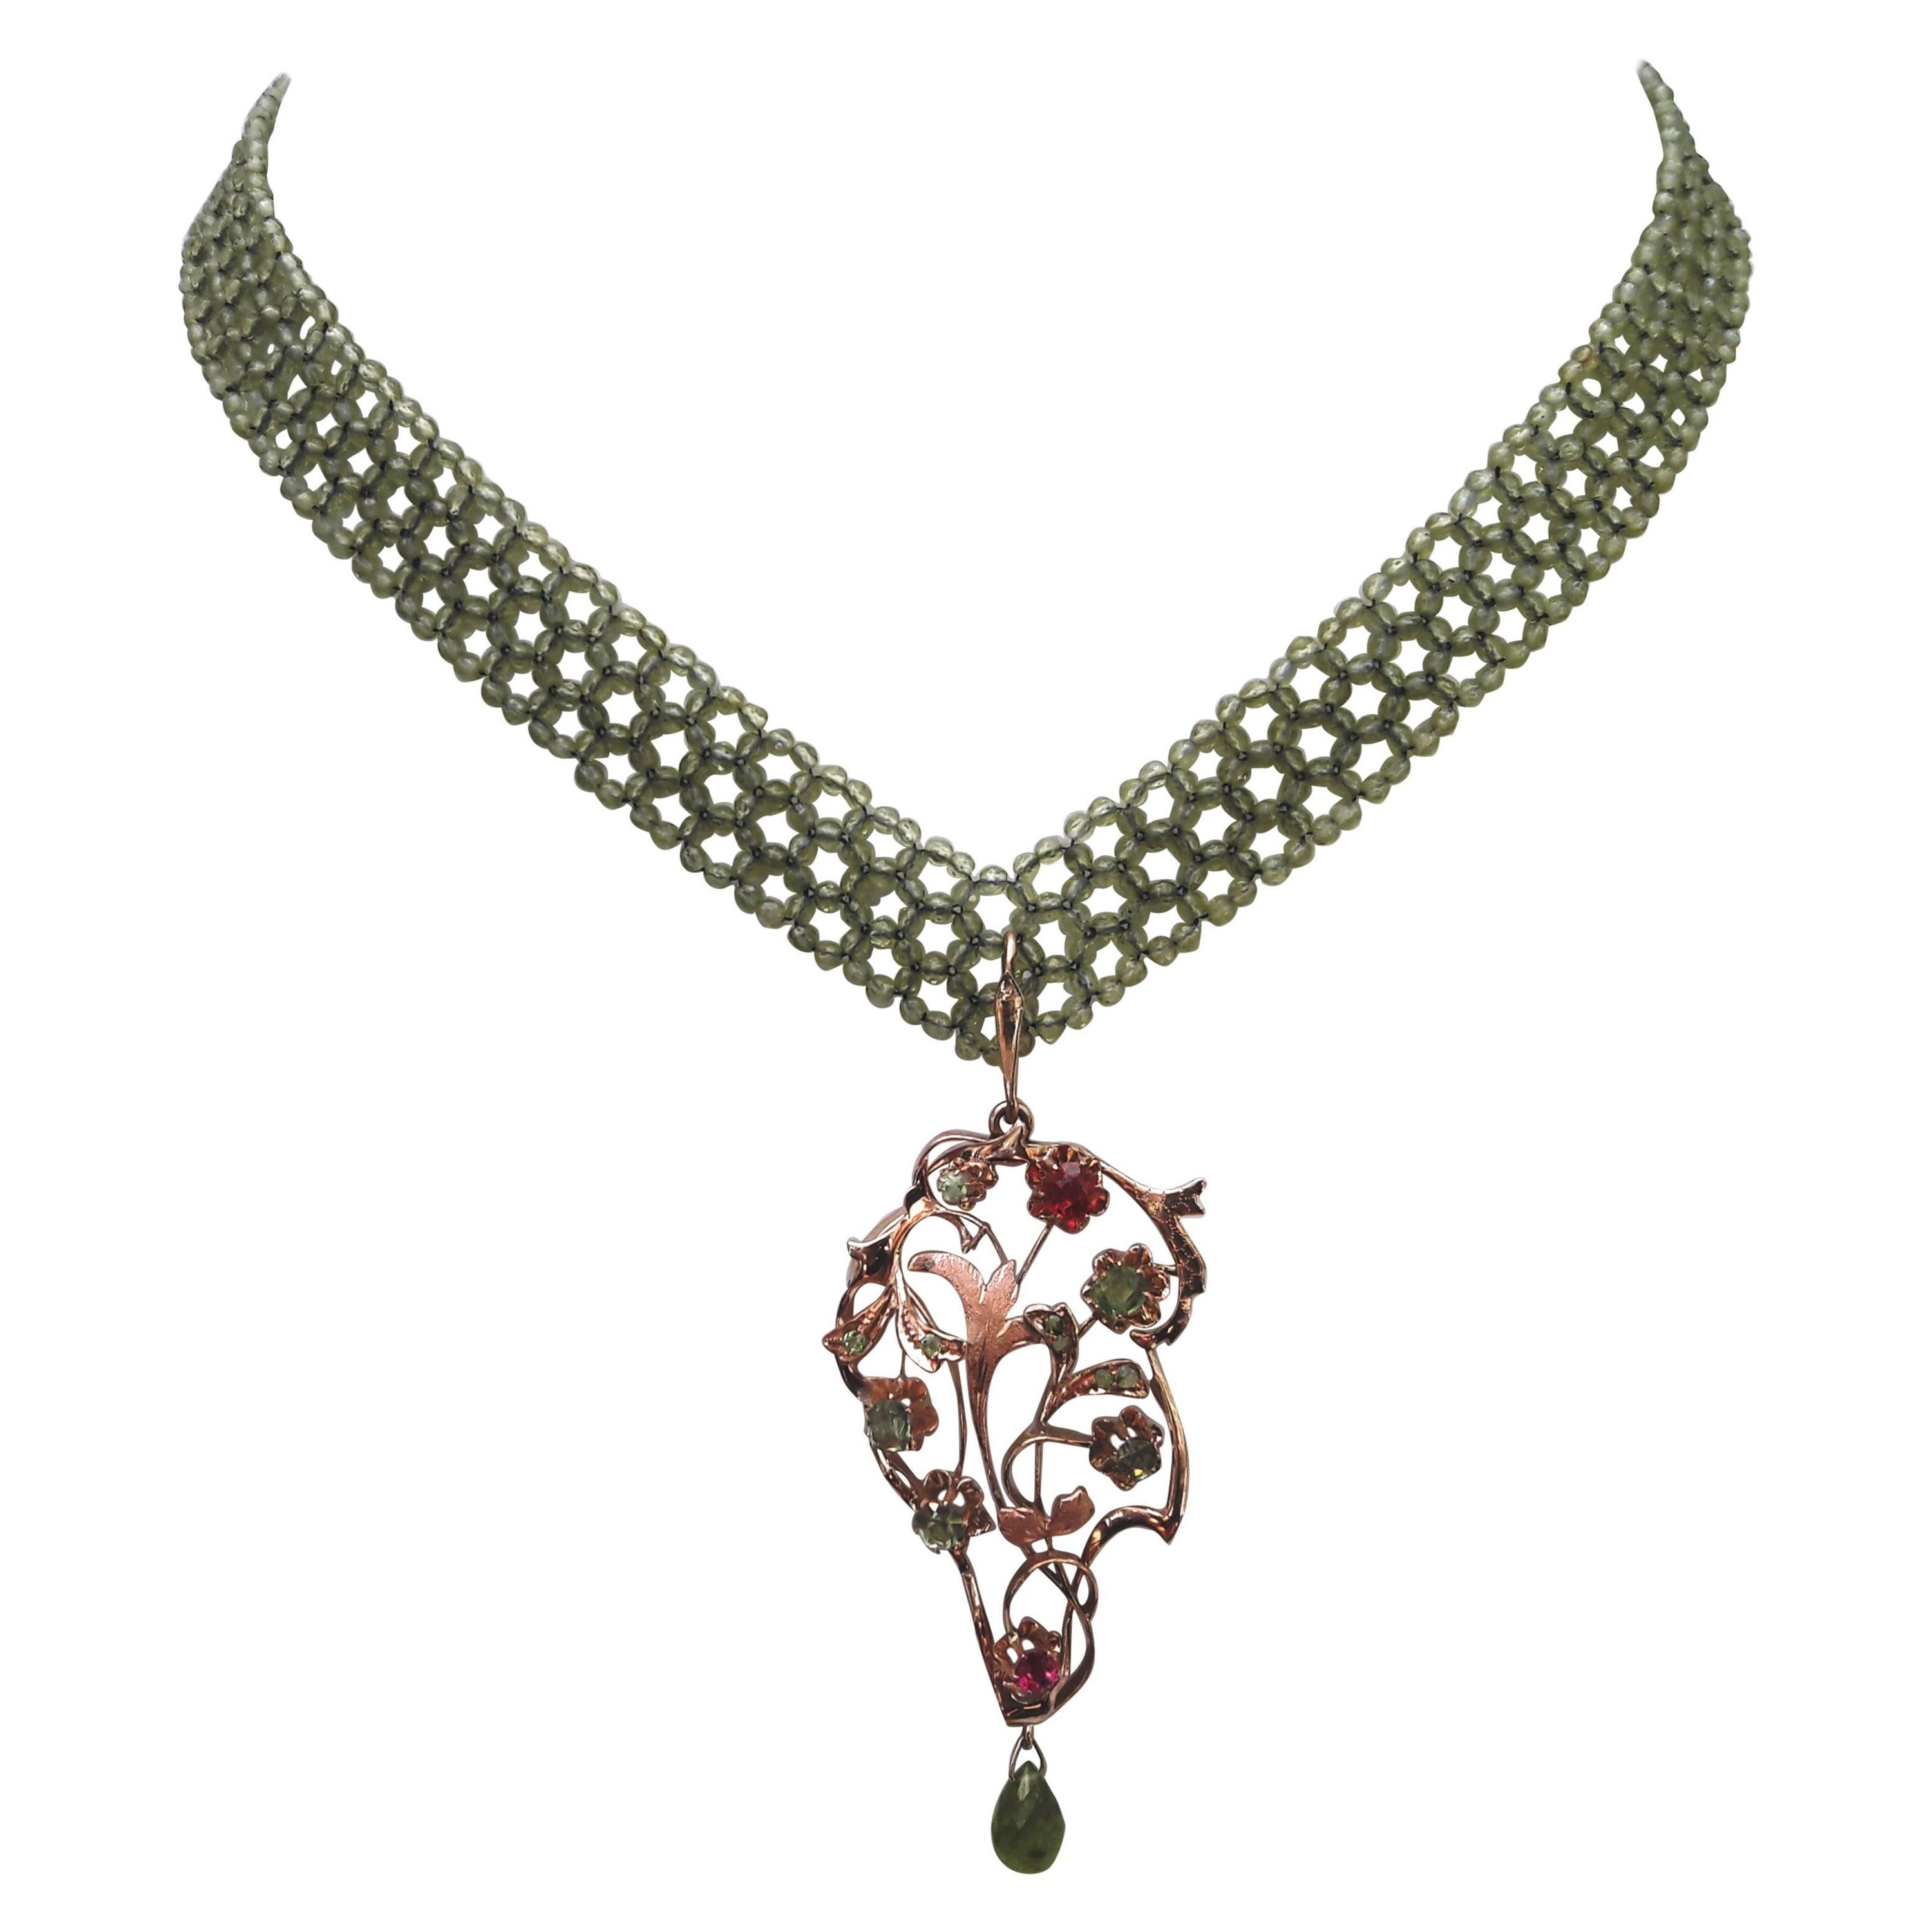 Gema Natural Peridoto 4-5MM collar de perlas 125CTS 20" Suave Rondelle verde oliva 